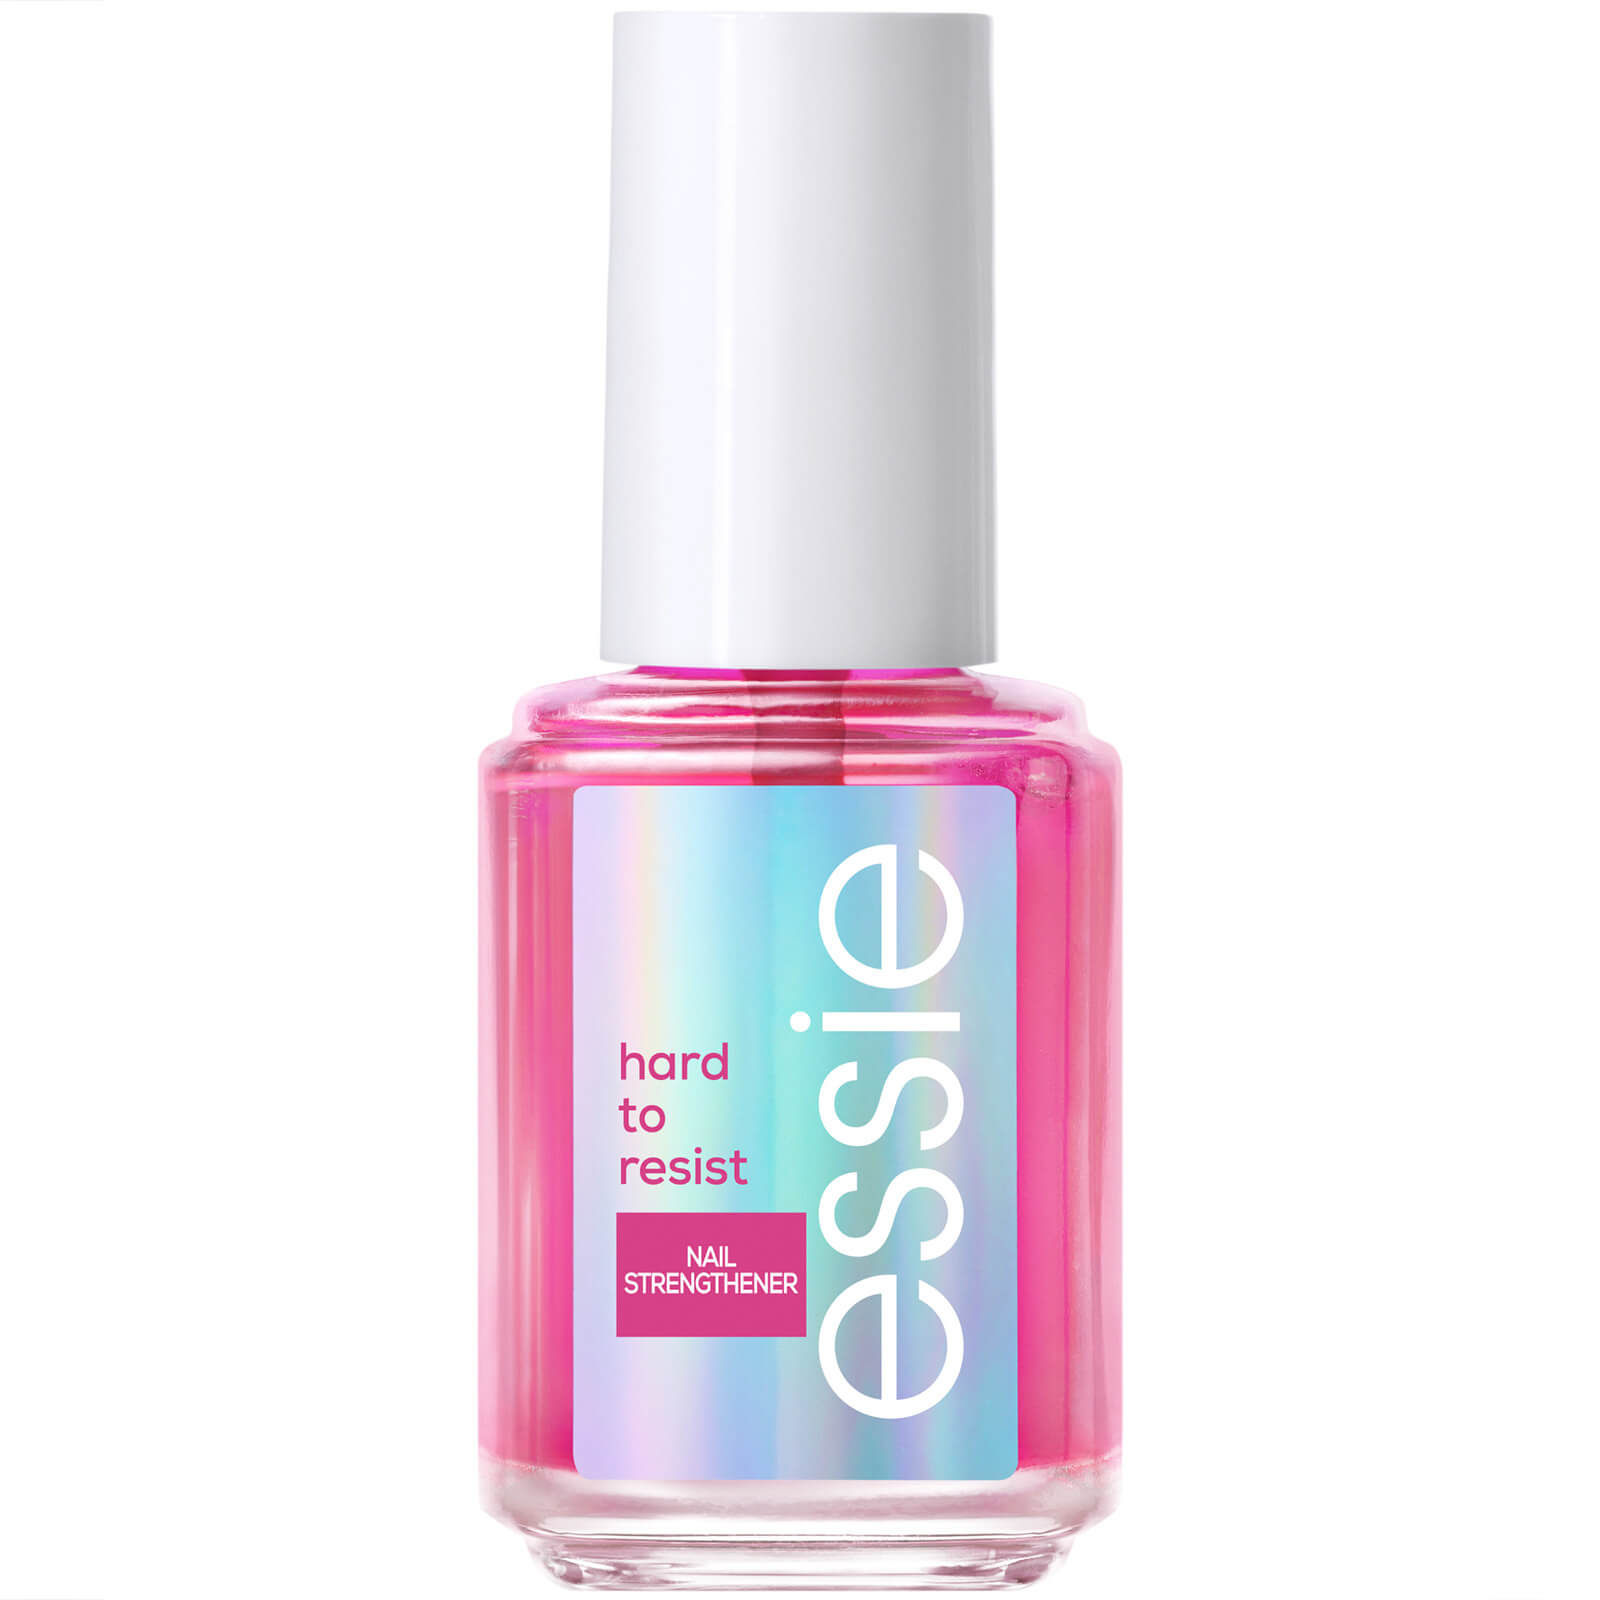 Image of essie Nail Care Hard to Resist Nail Strengthener - Pink Tint 13.5ml